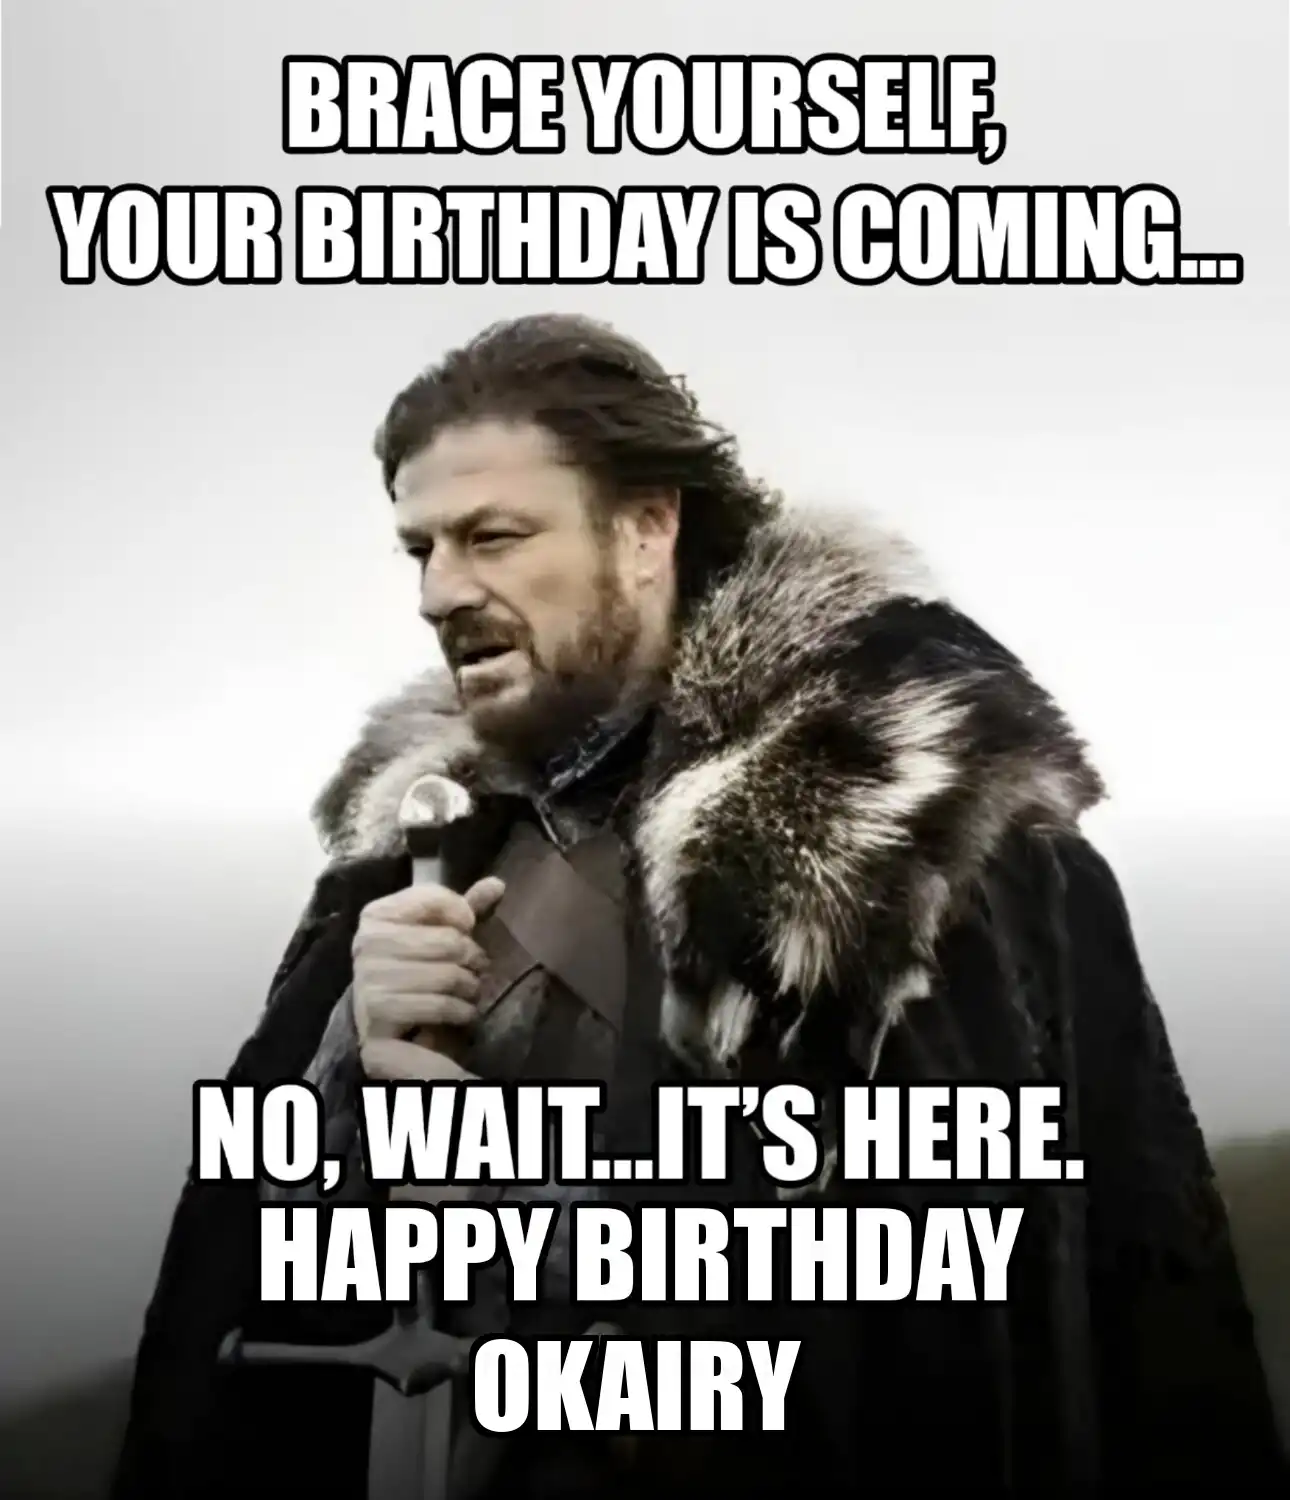 Happy Birthday Okairy Brace Yourself Your Birthday Is Coming Meme